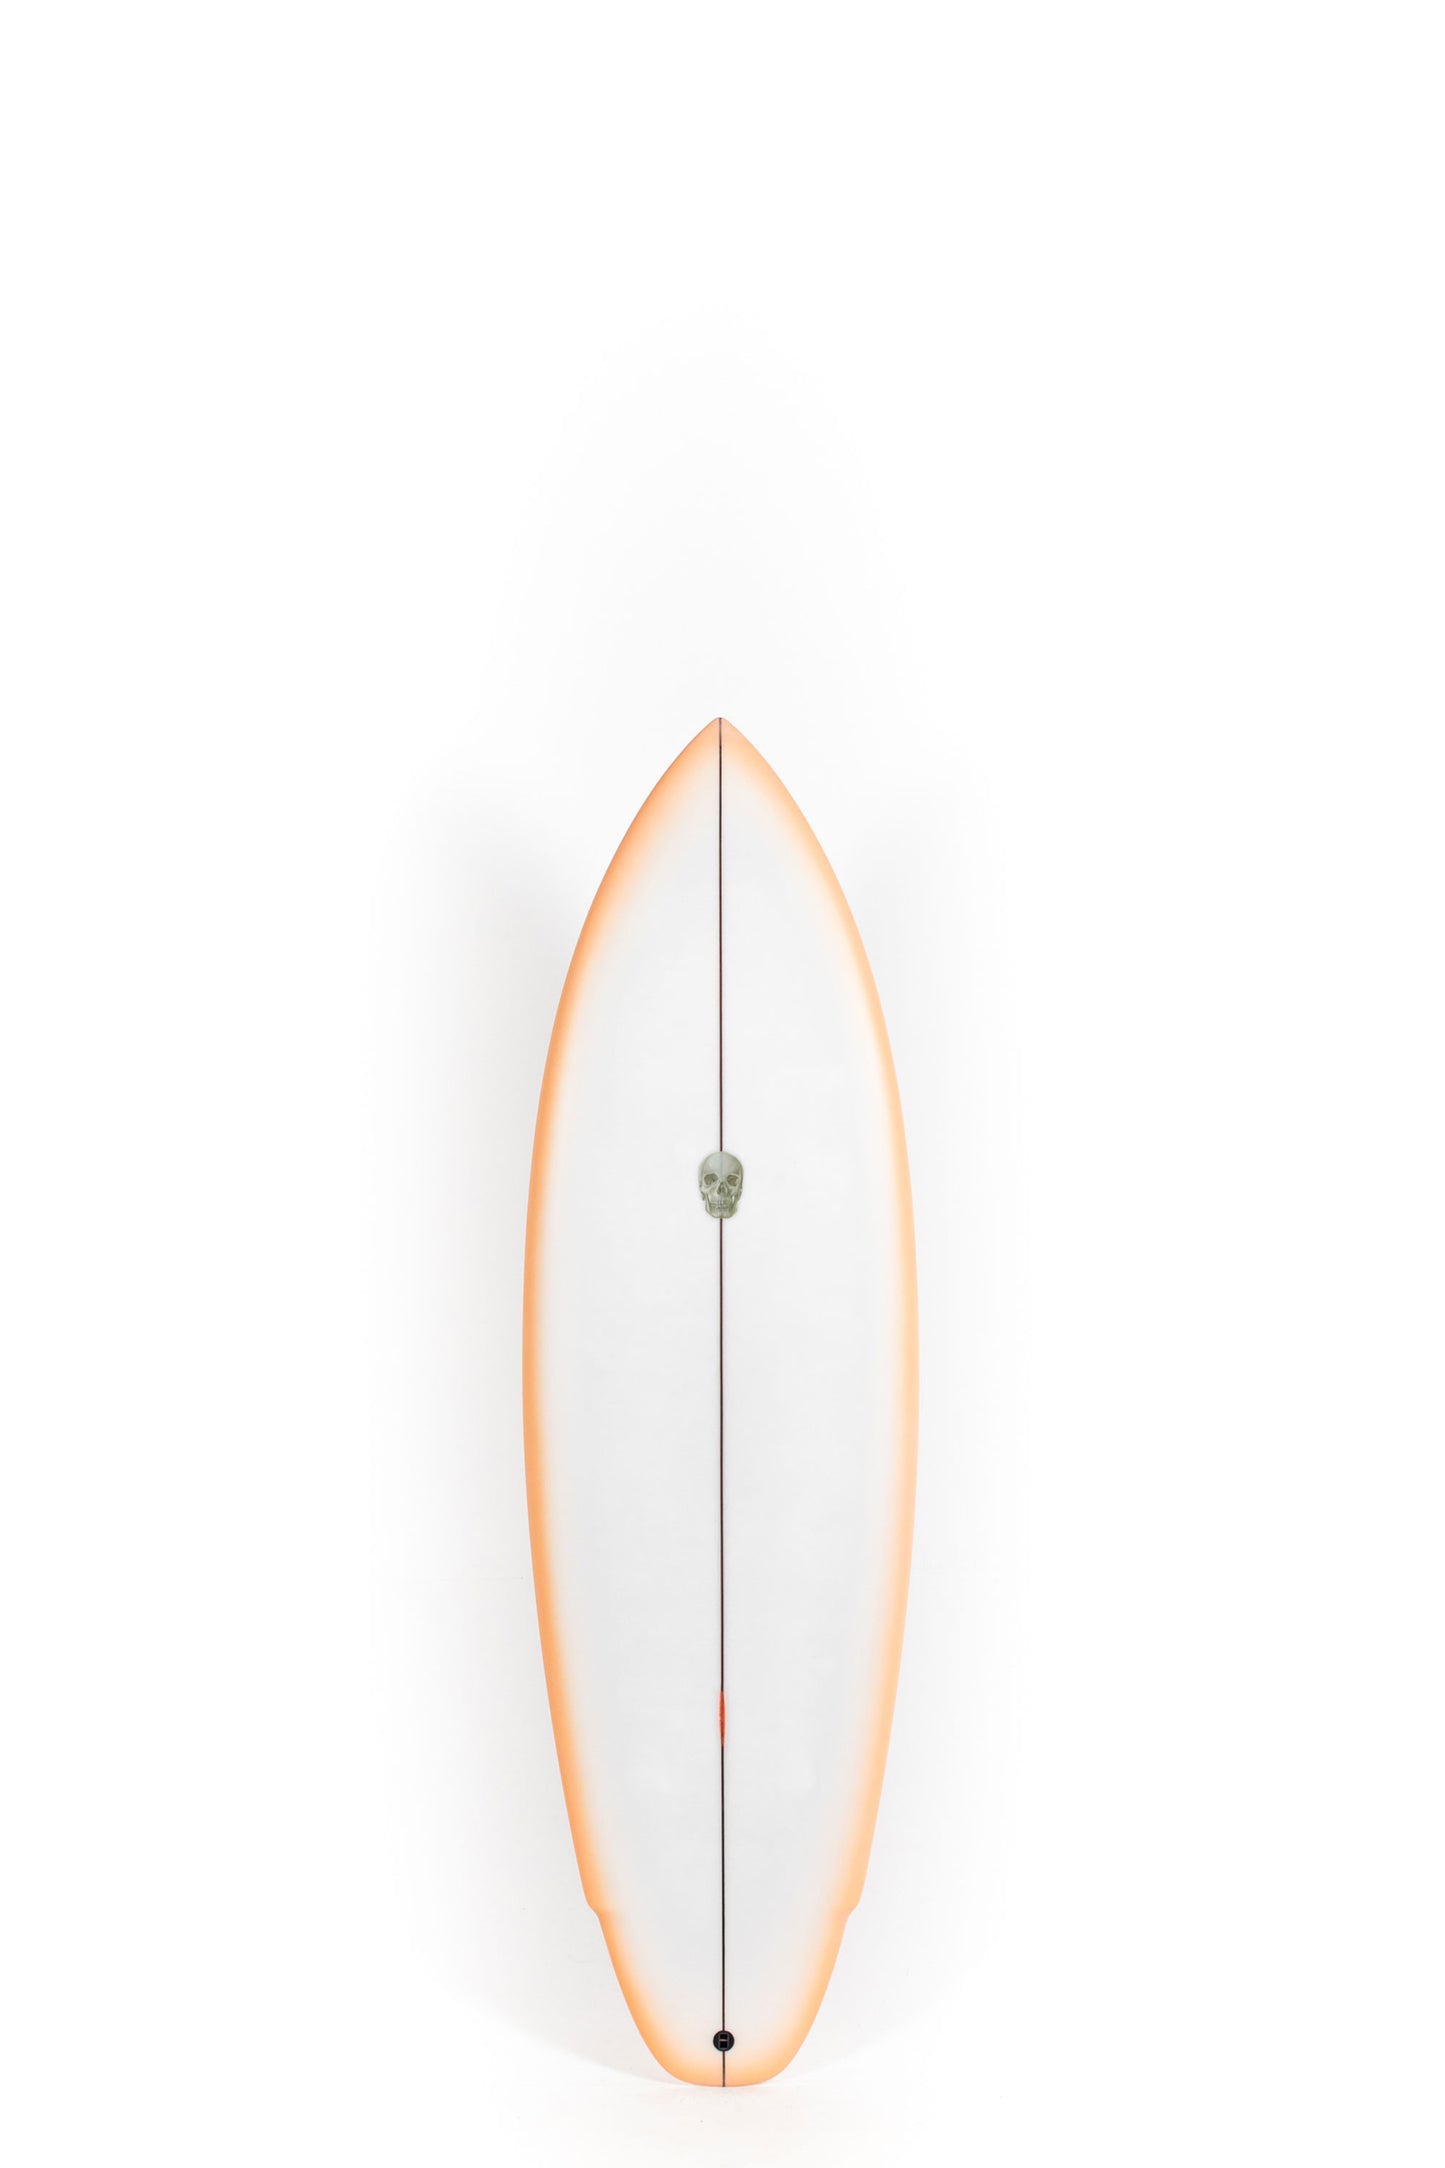 Pukas Surf Shop - Christenson Surfboards - LANE SPLITTER - 5'8" x 20 x 2 1/2 - CX04485